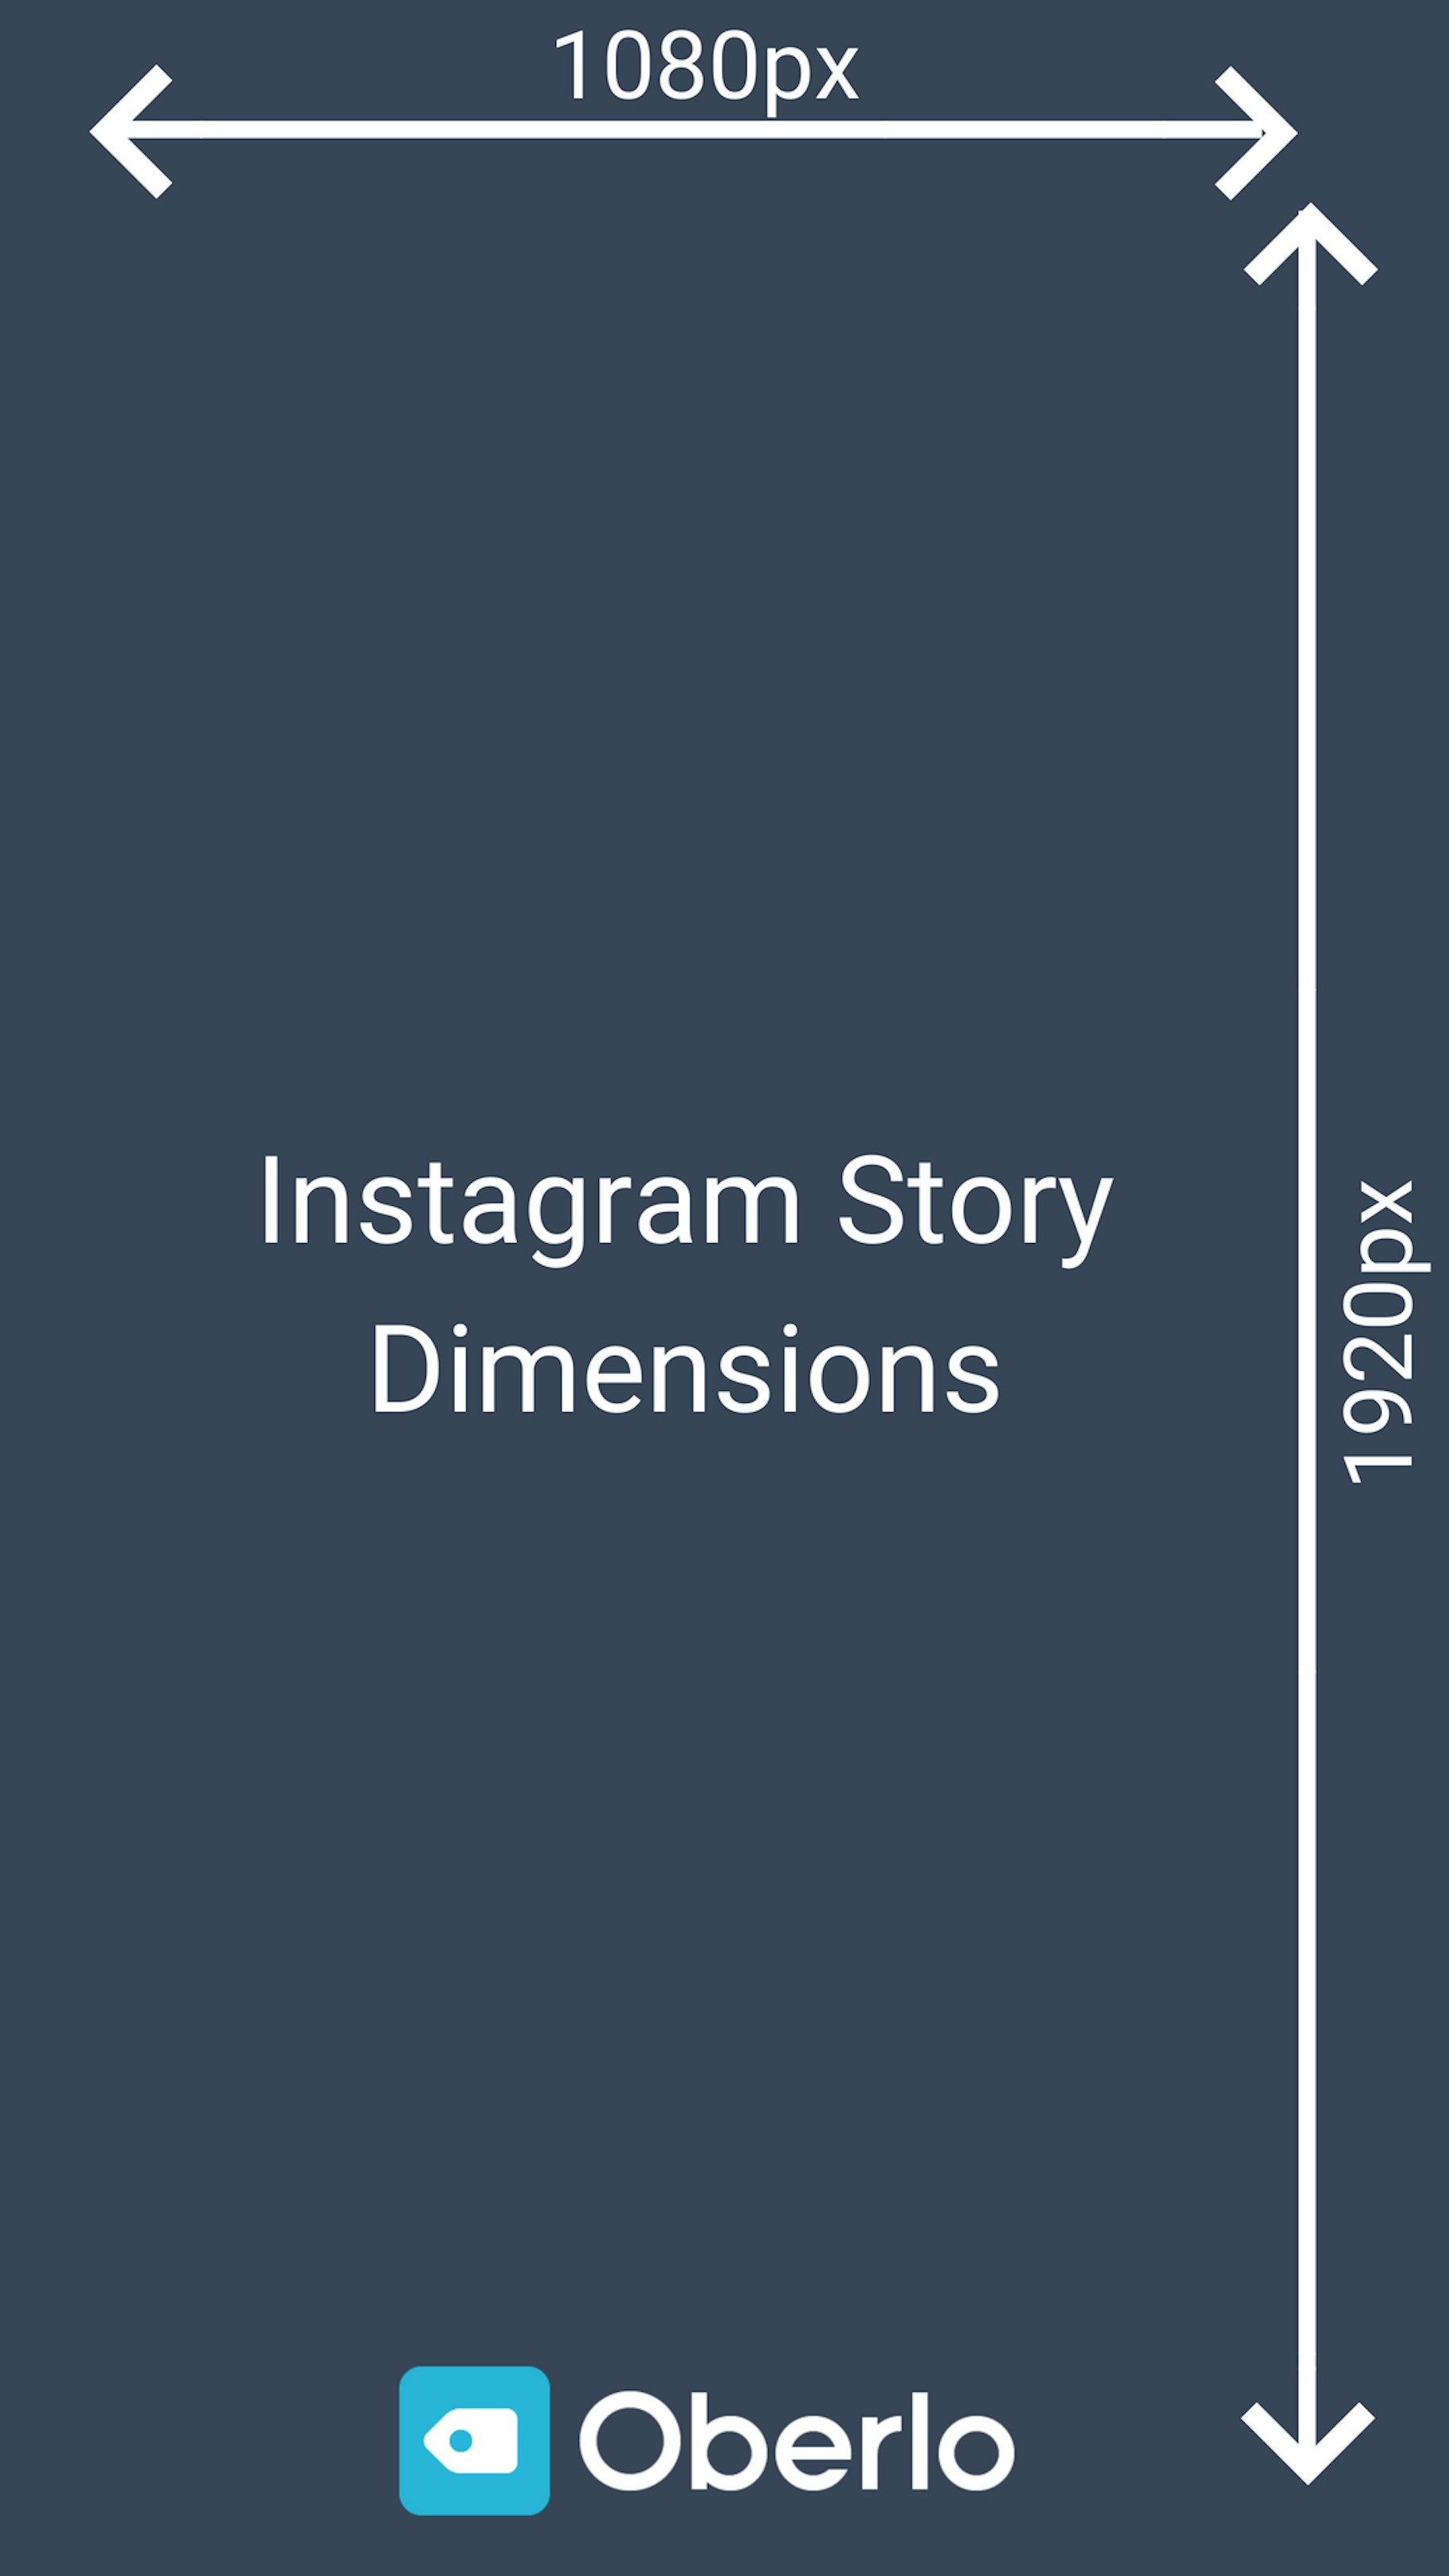 Instagram Stories dimensioner 